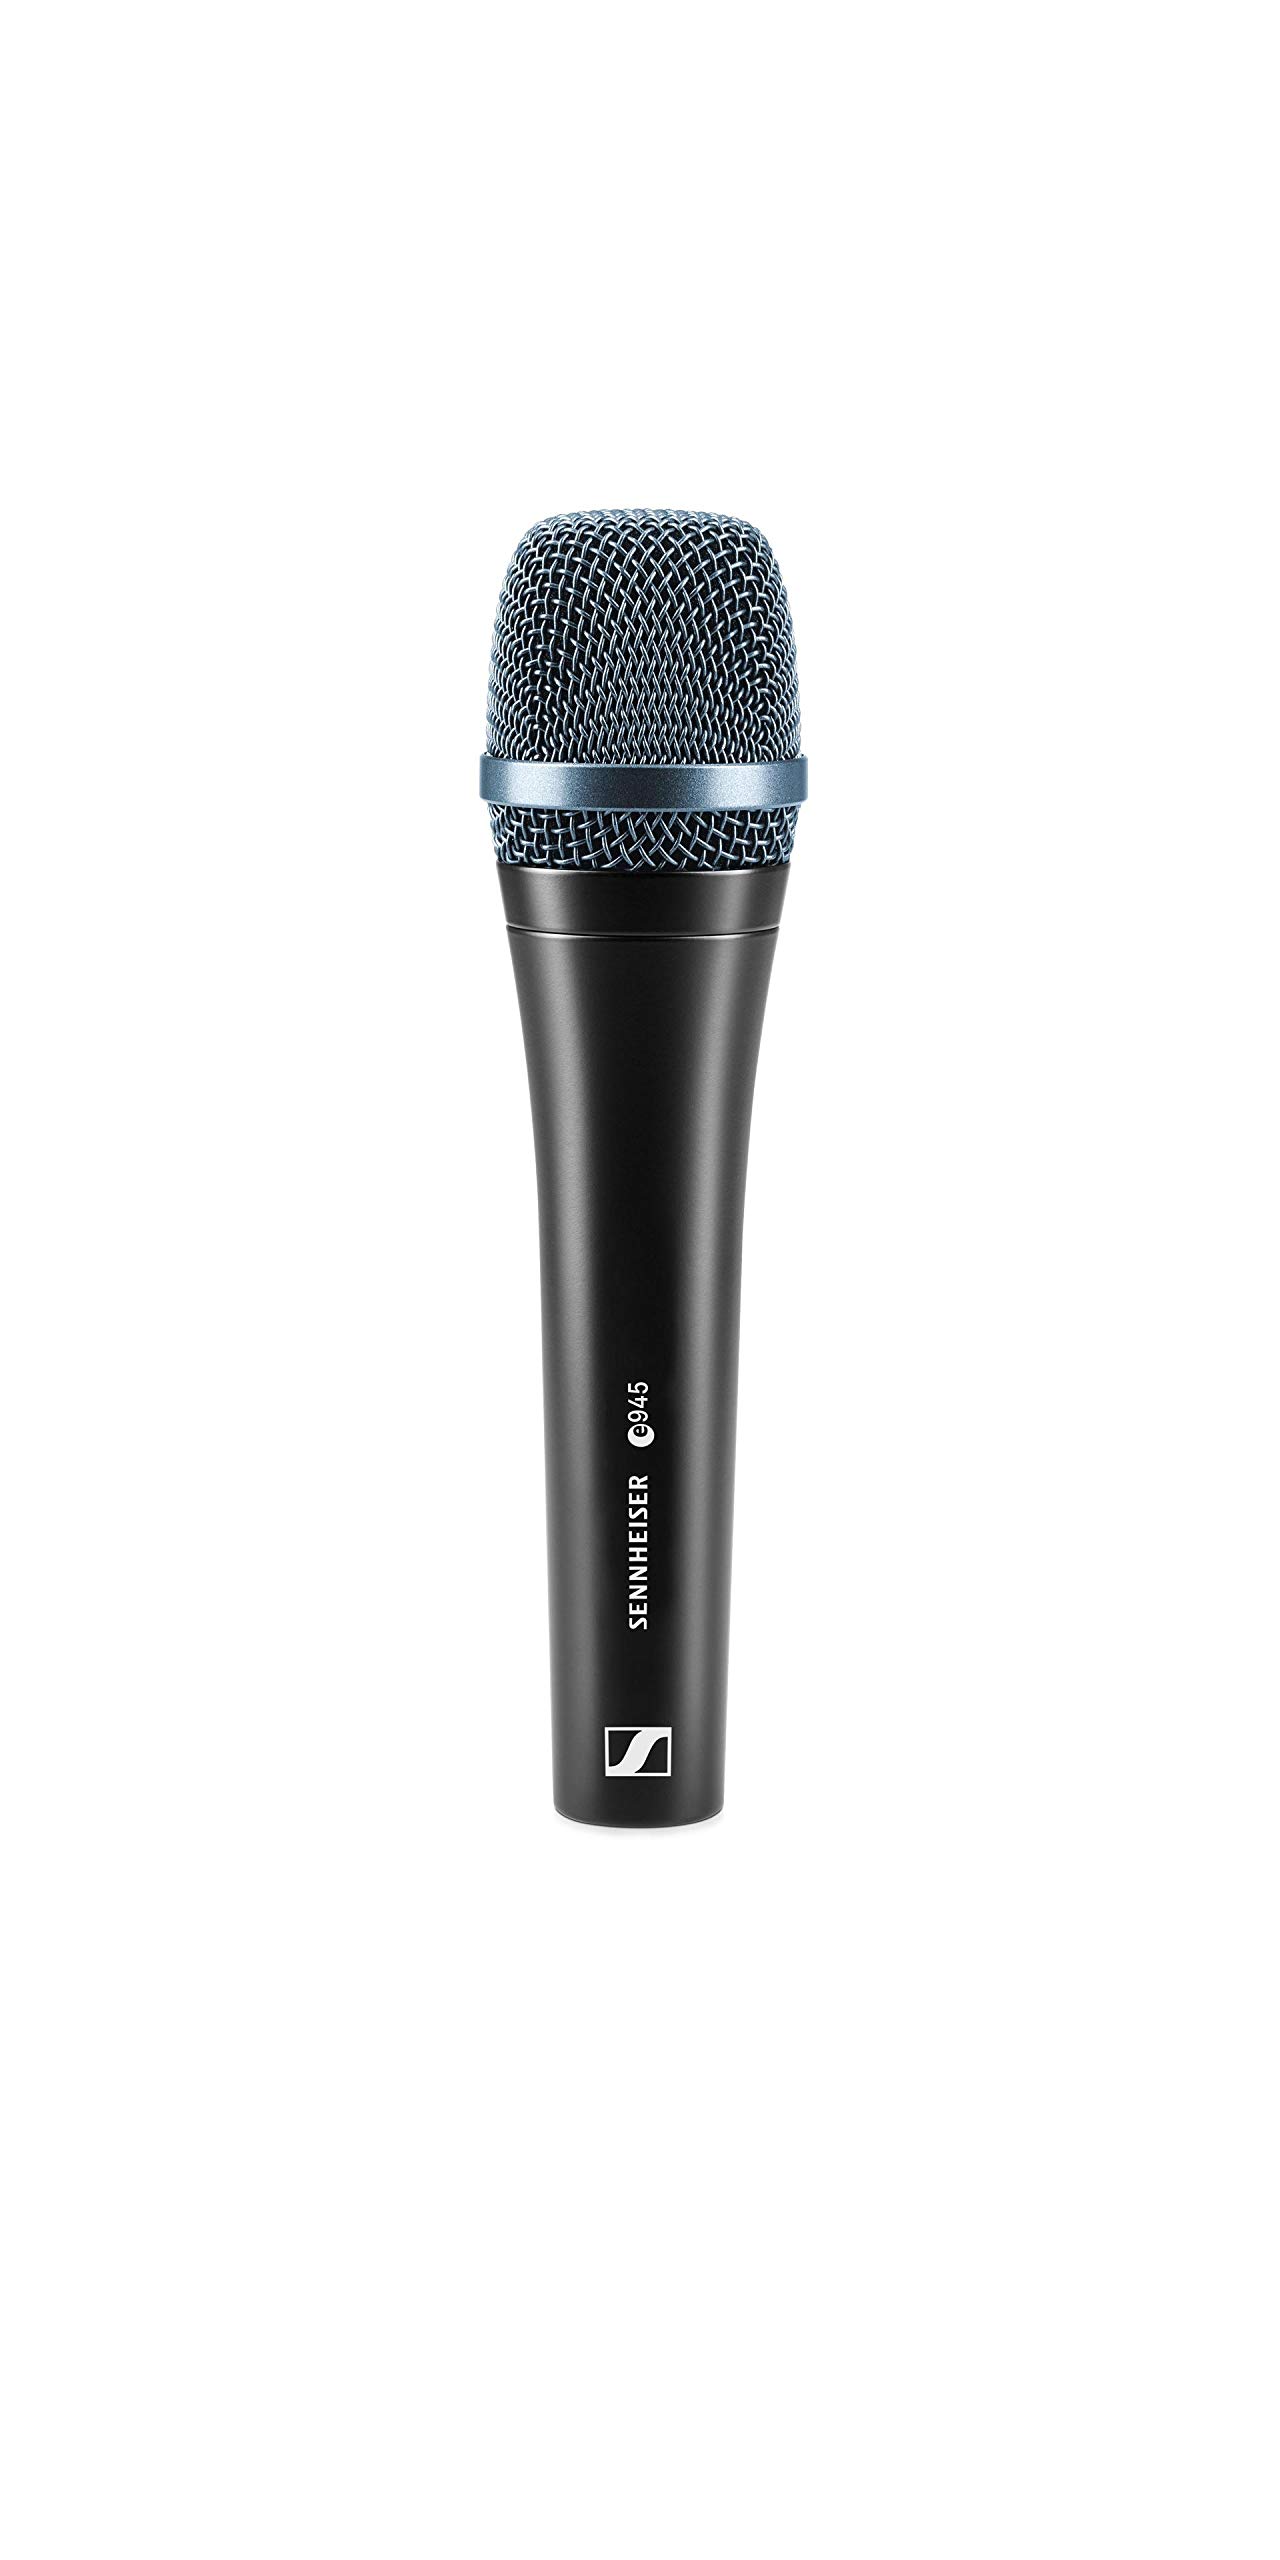 Sennheiser Pro Audio Microfone Vocal Dinâmico Supercardióide E 945 Profissional E 945